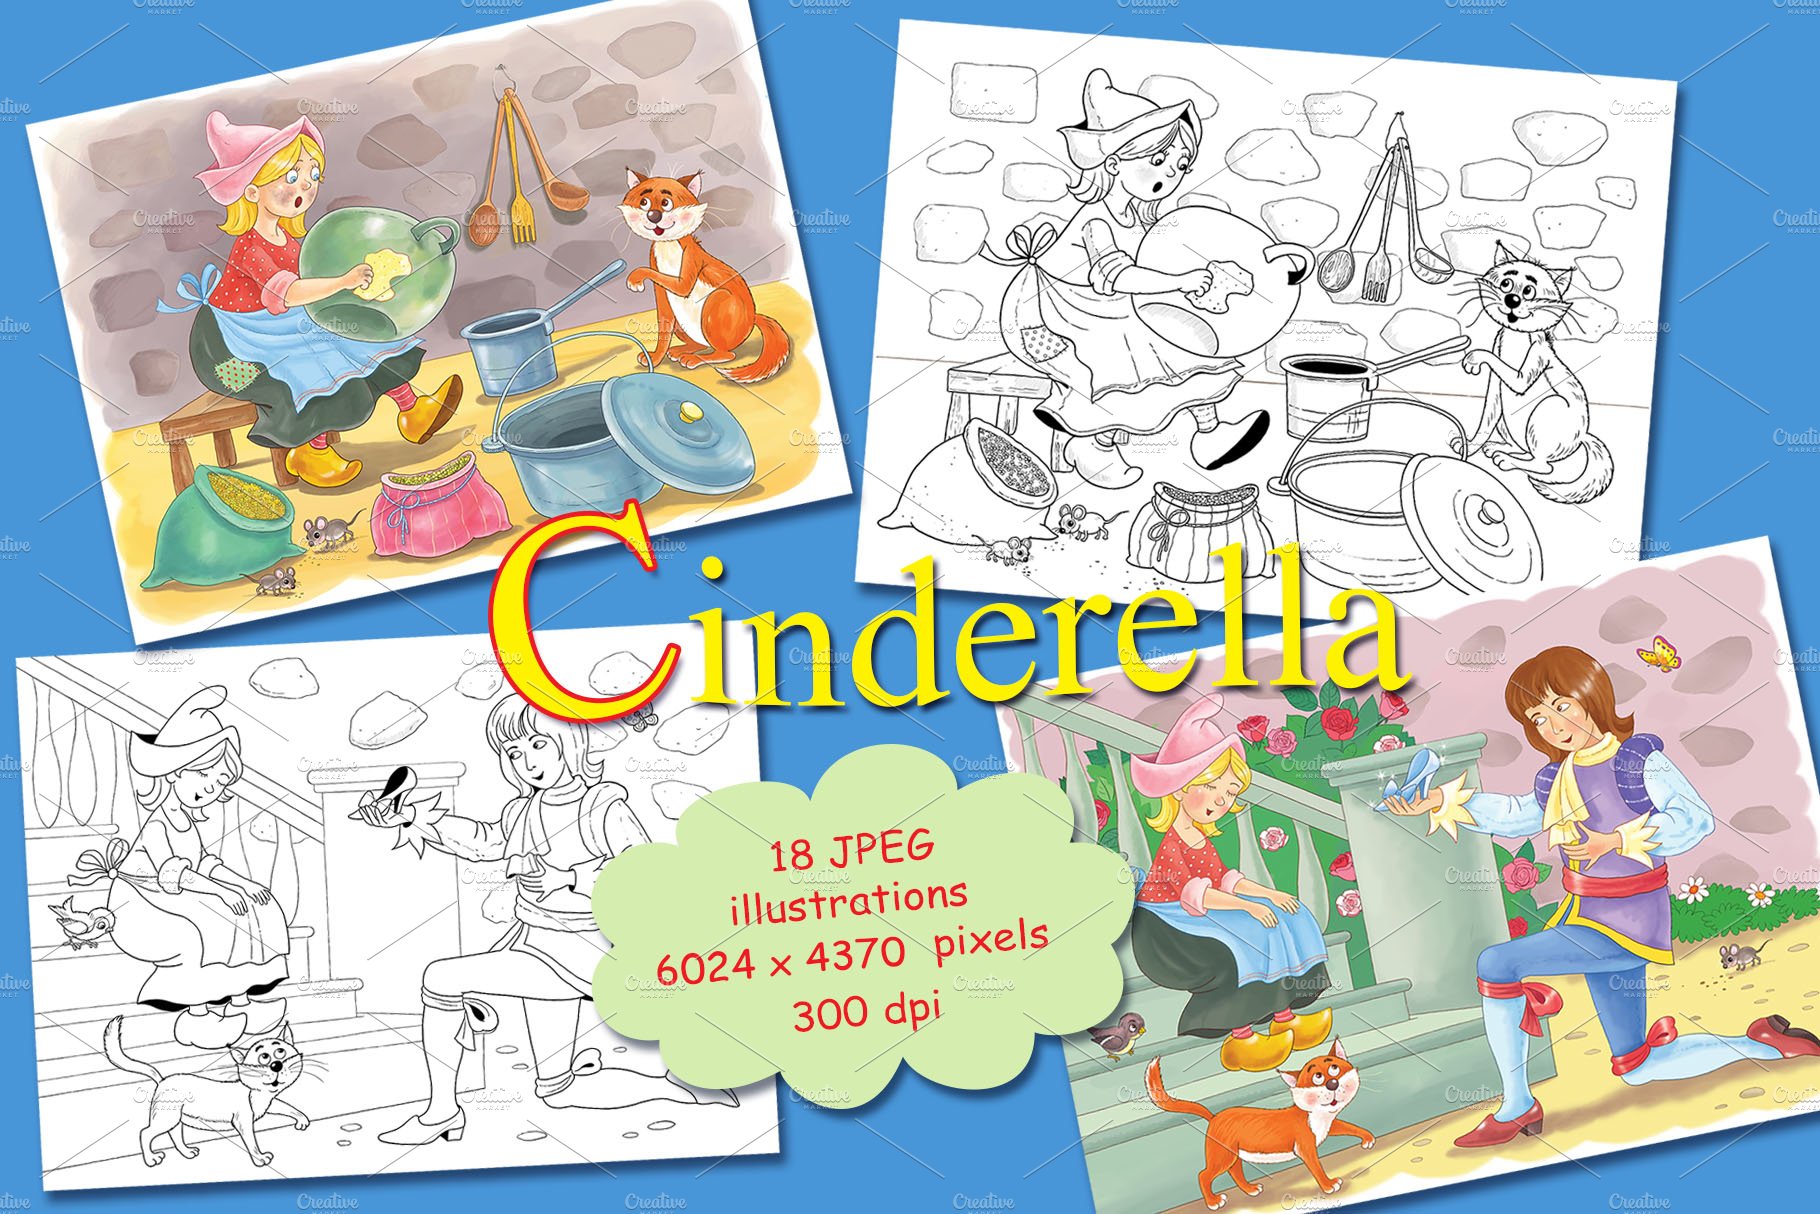 Cinderella bundle. Coloring pages cover image.